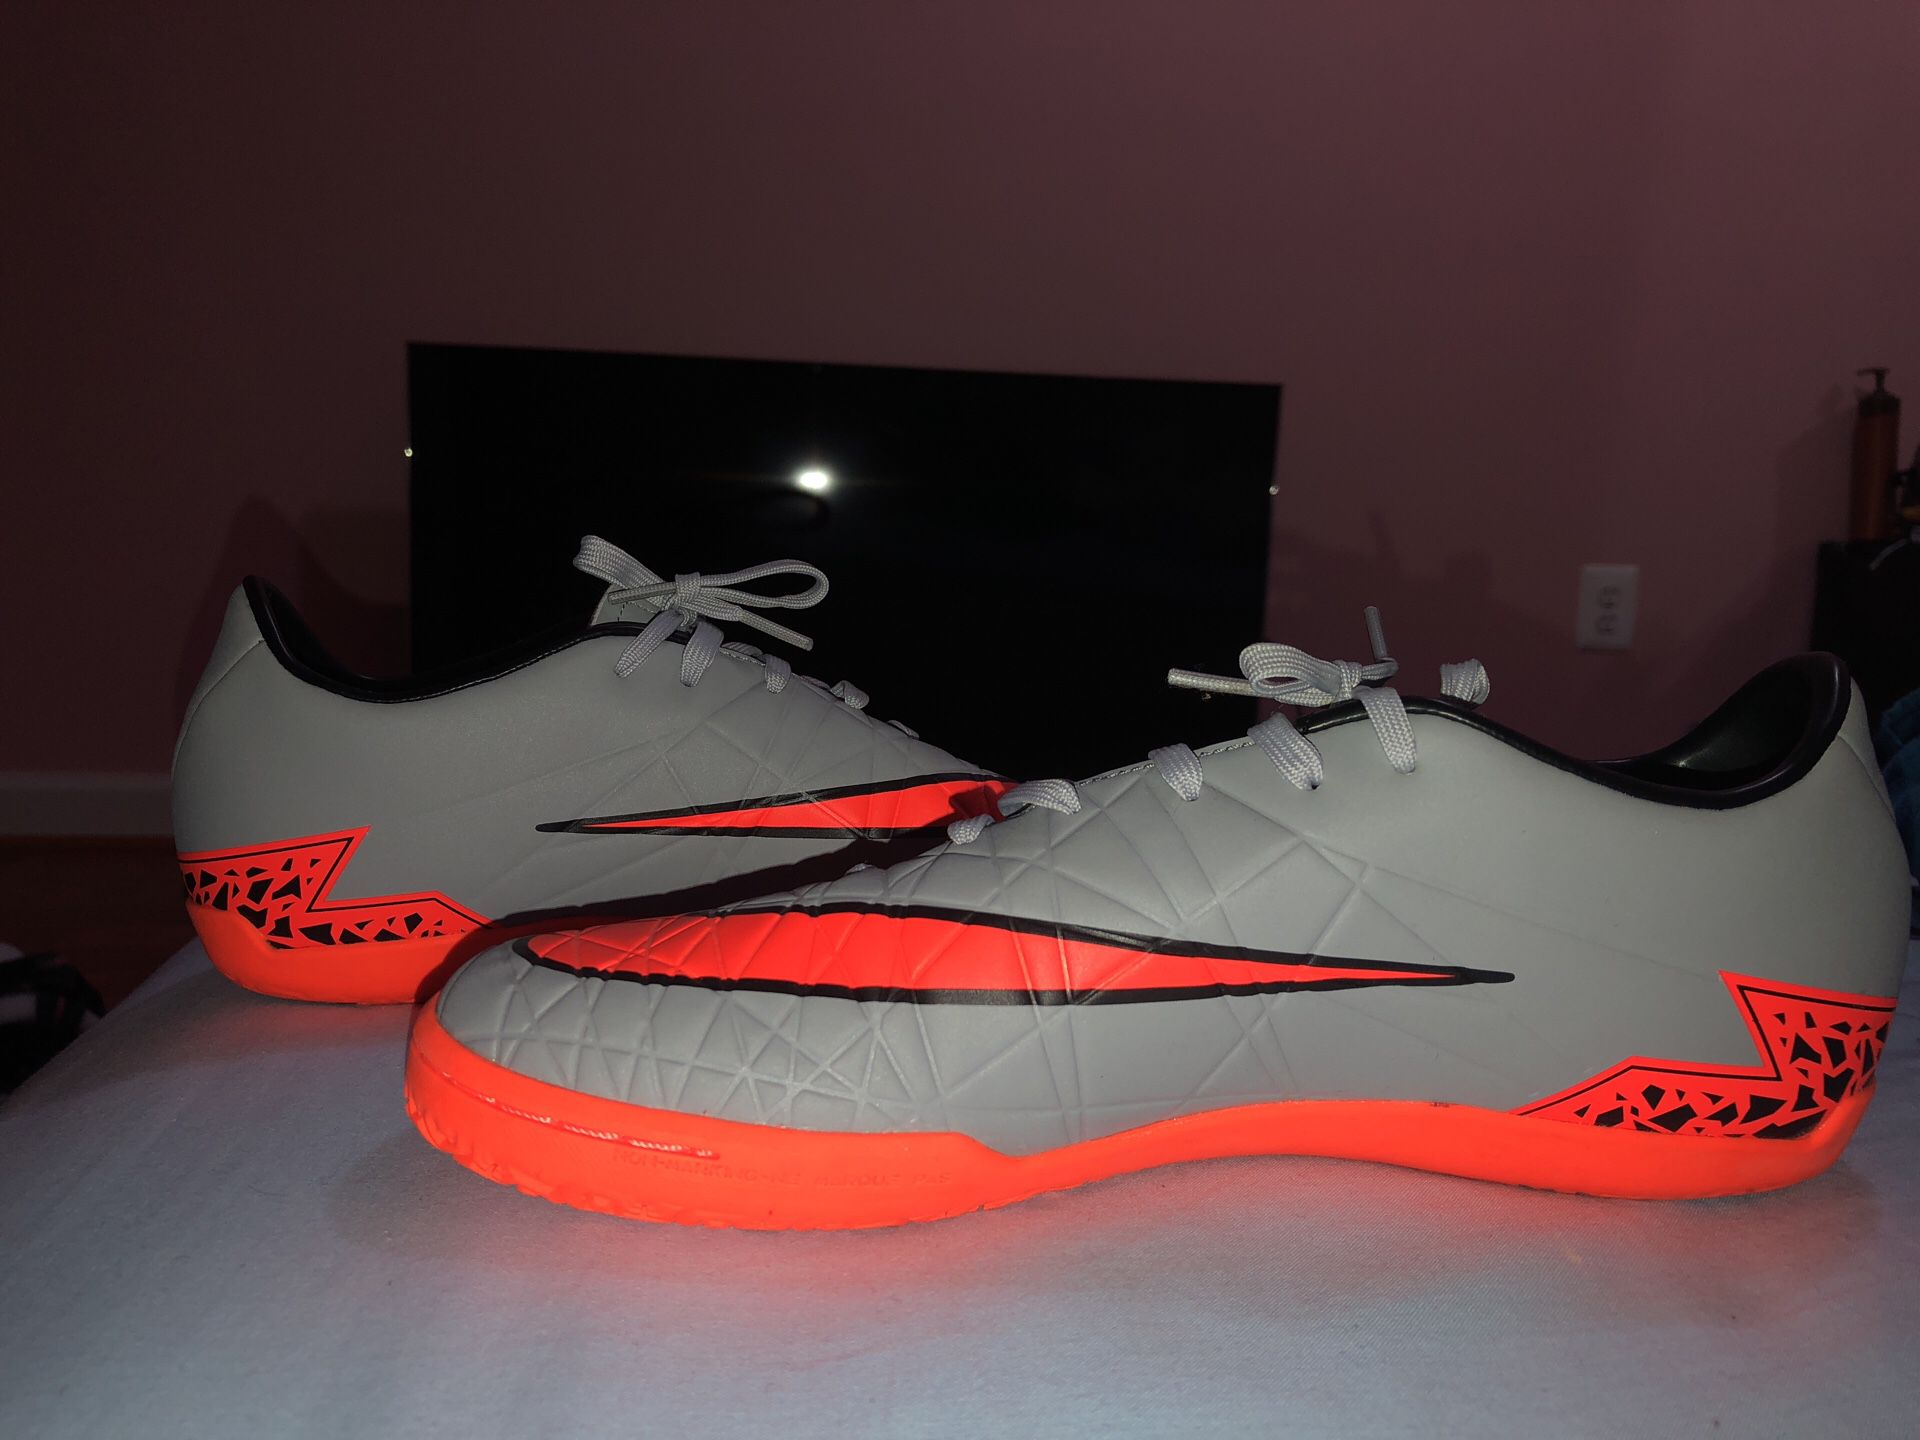 Nike Hypervenom Indoor soccer cleats